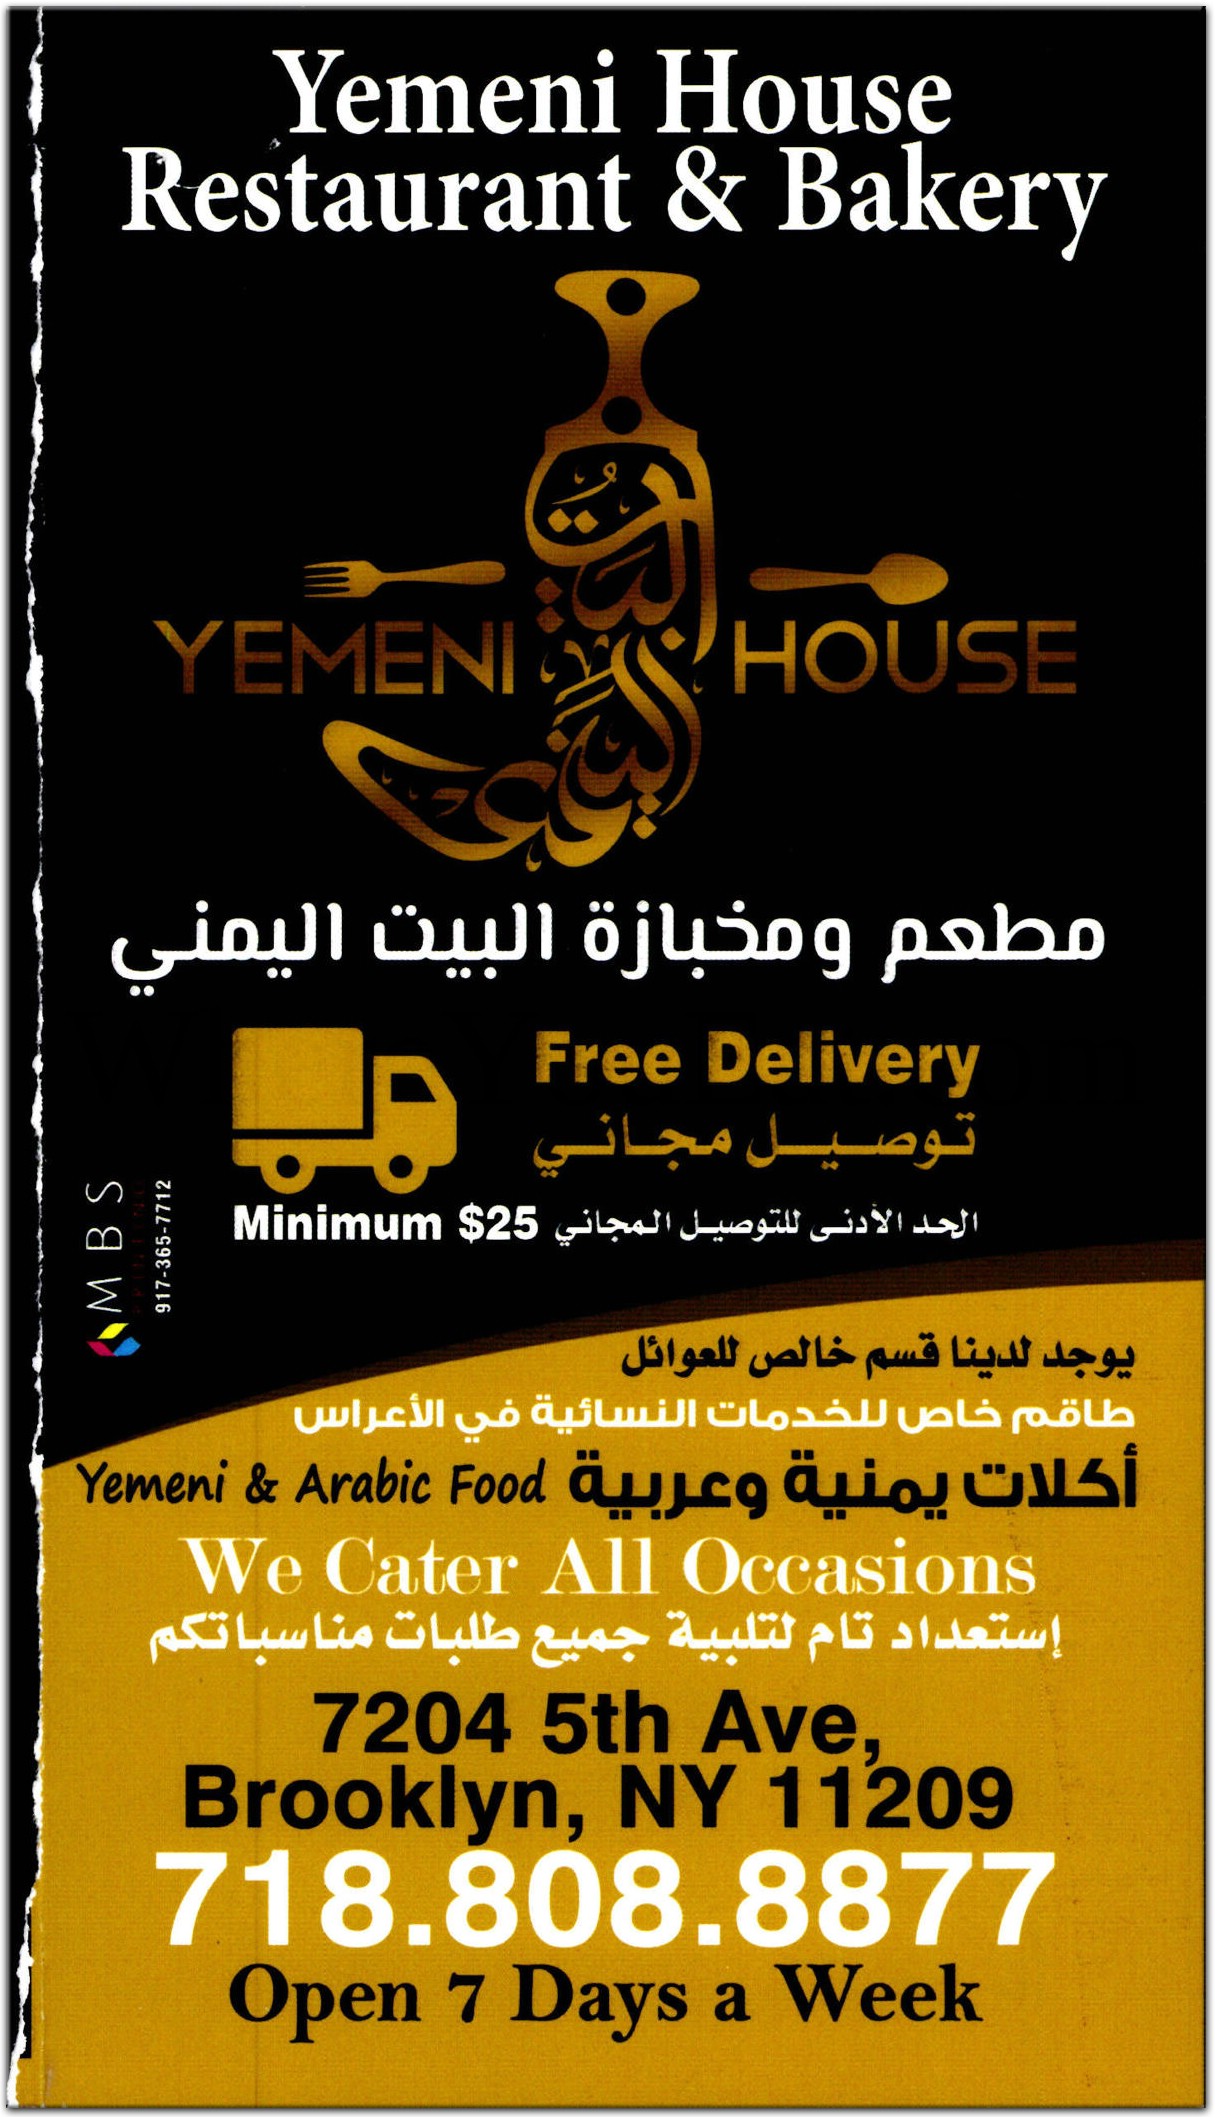 YemeniHouse1 